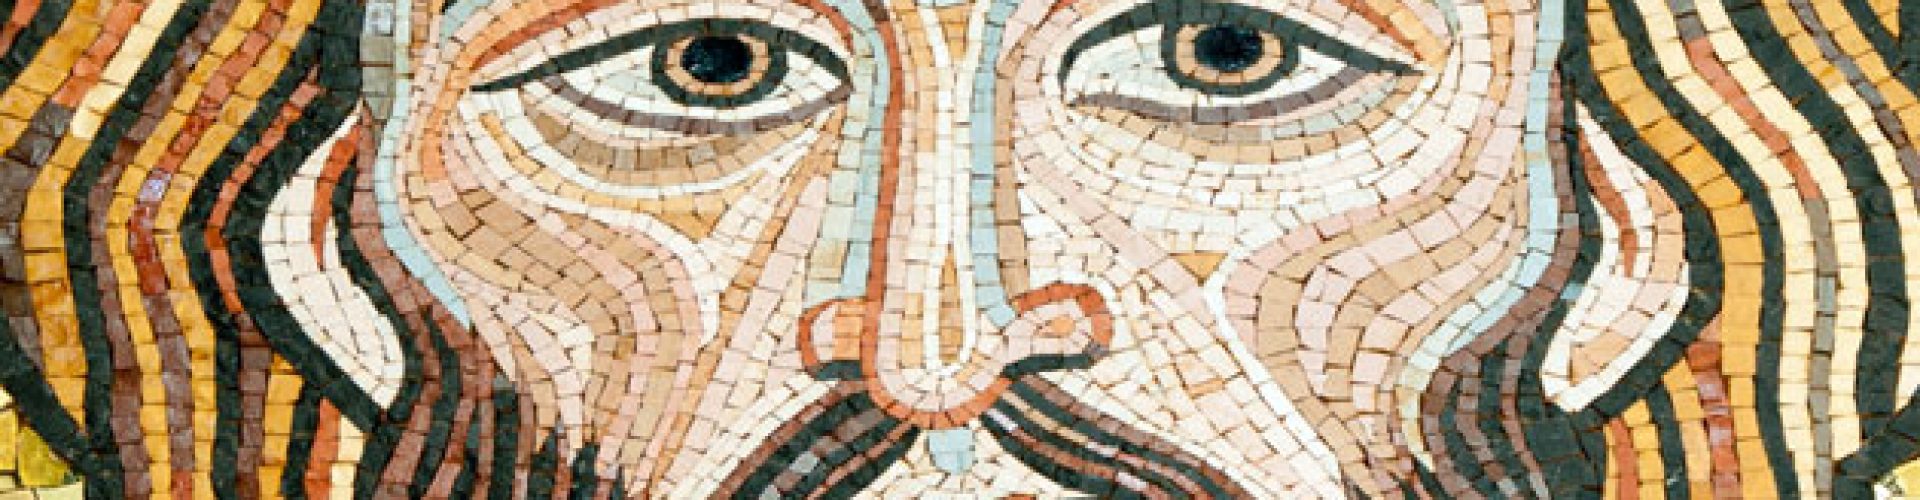 mosaic of jesus face